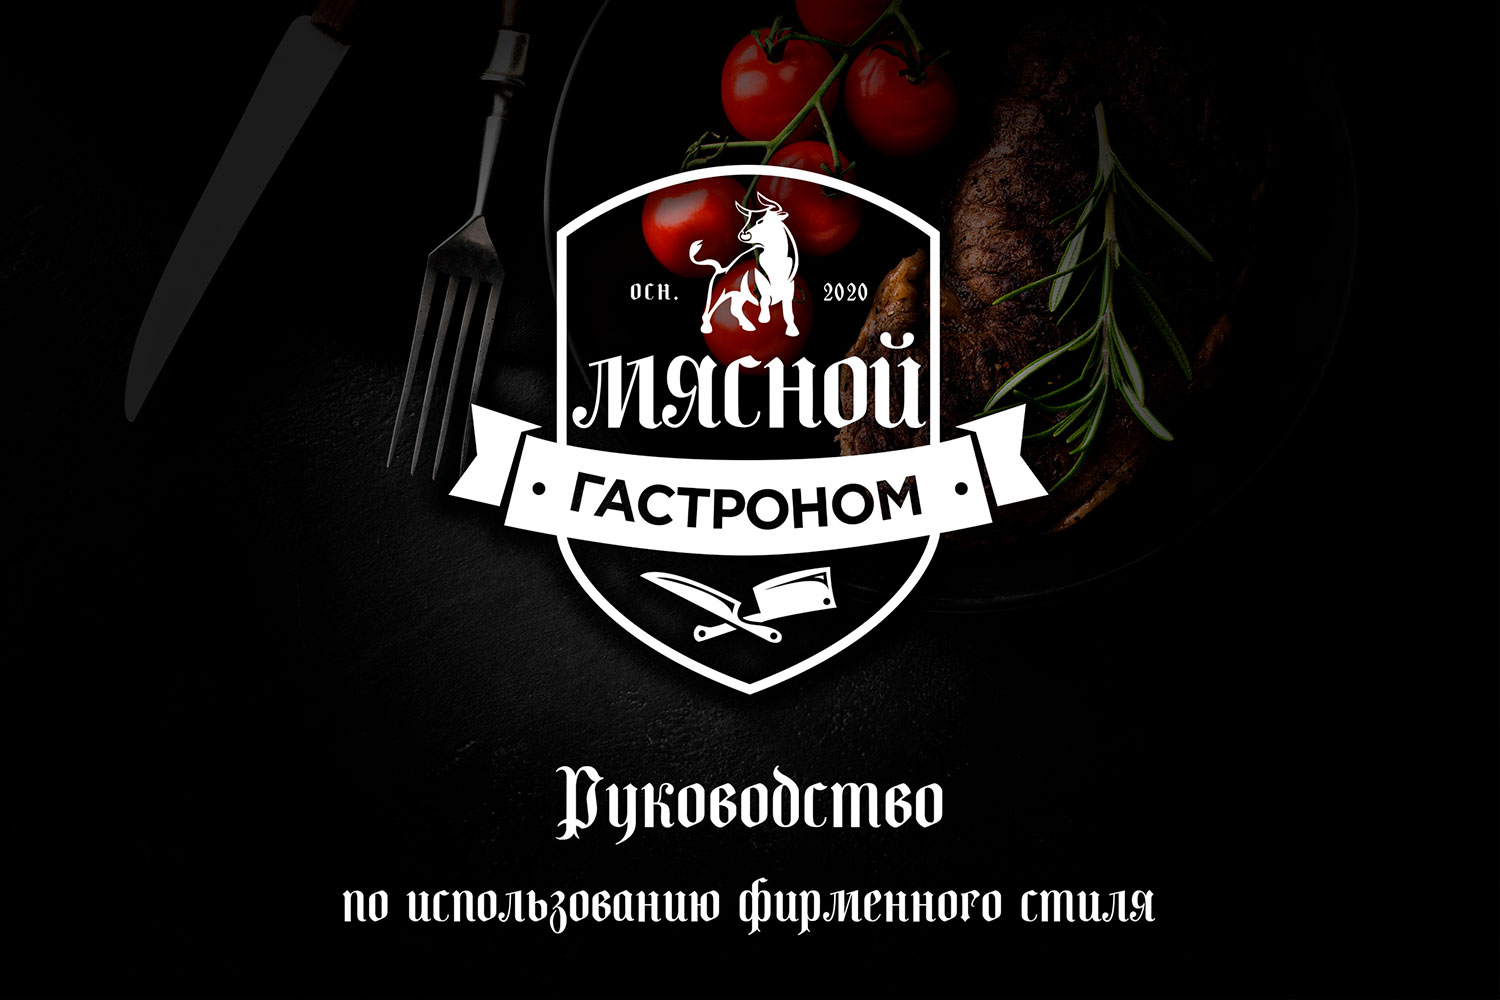 разработка логотипа и брендбука для мясного магазина